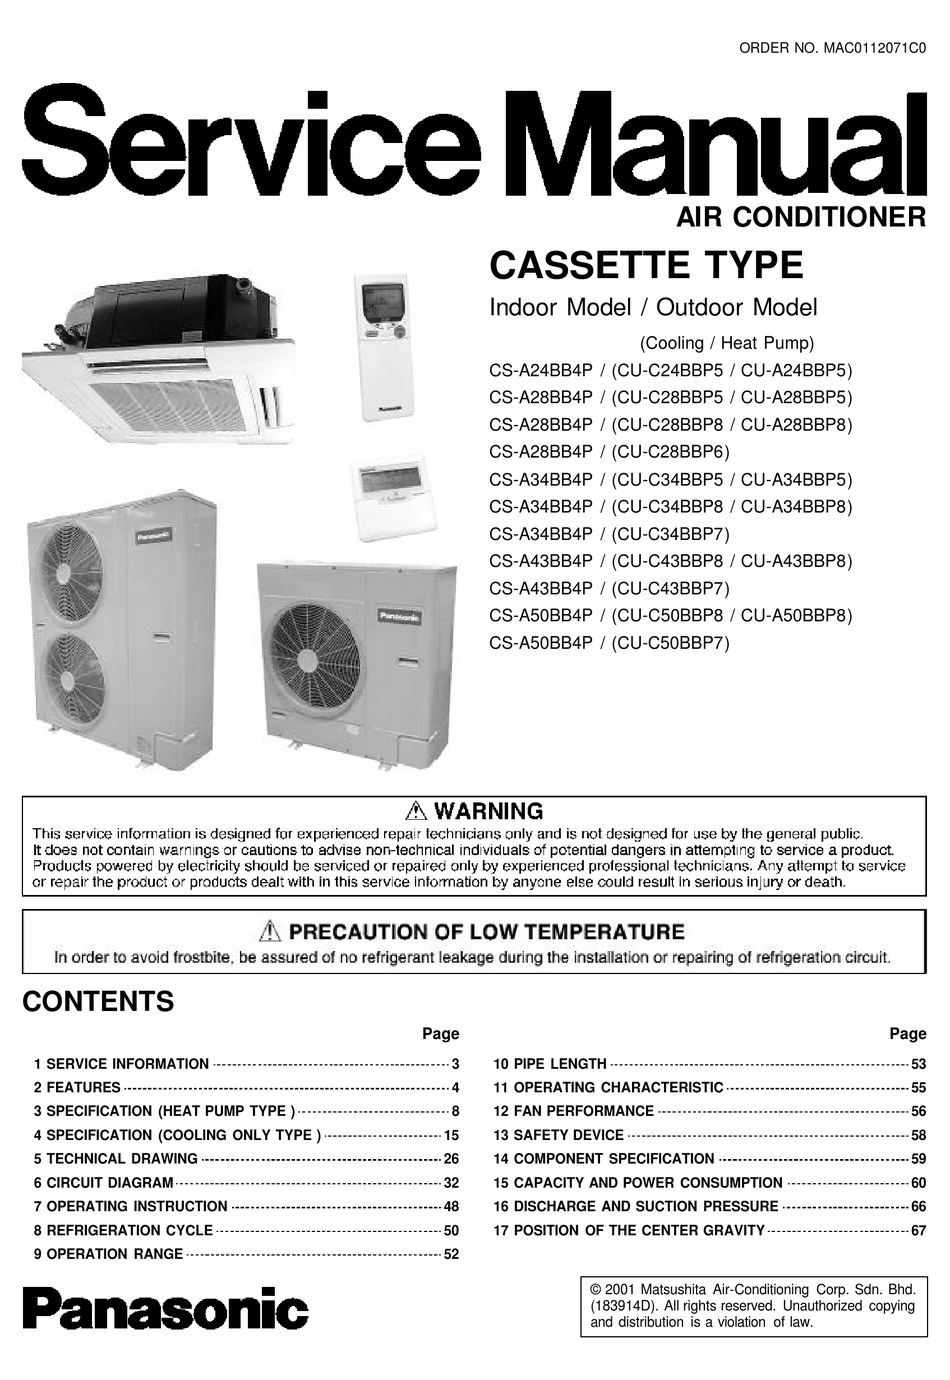 PANASONIC CS-A24BB4P SERVICE MANUAL Pdf Download | ManualsLib  Wiring Diagram Ac Cassette Panasonic    ManualsLib